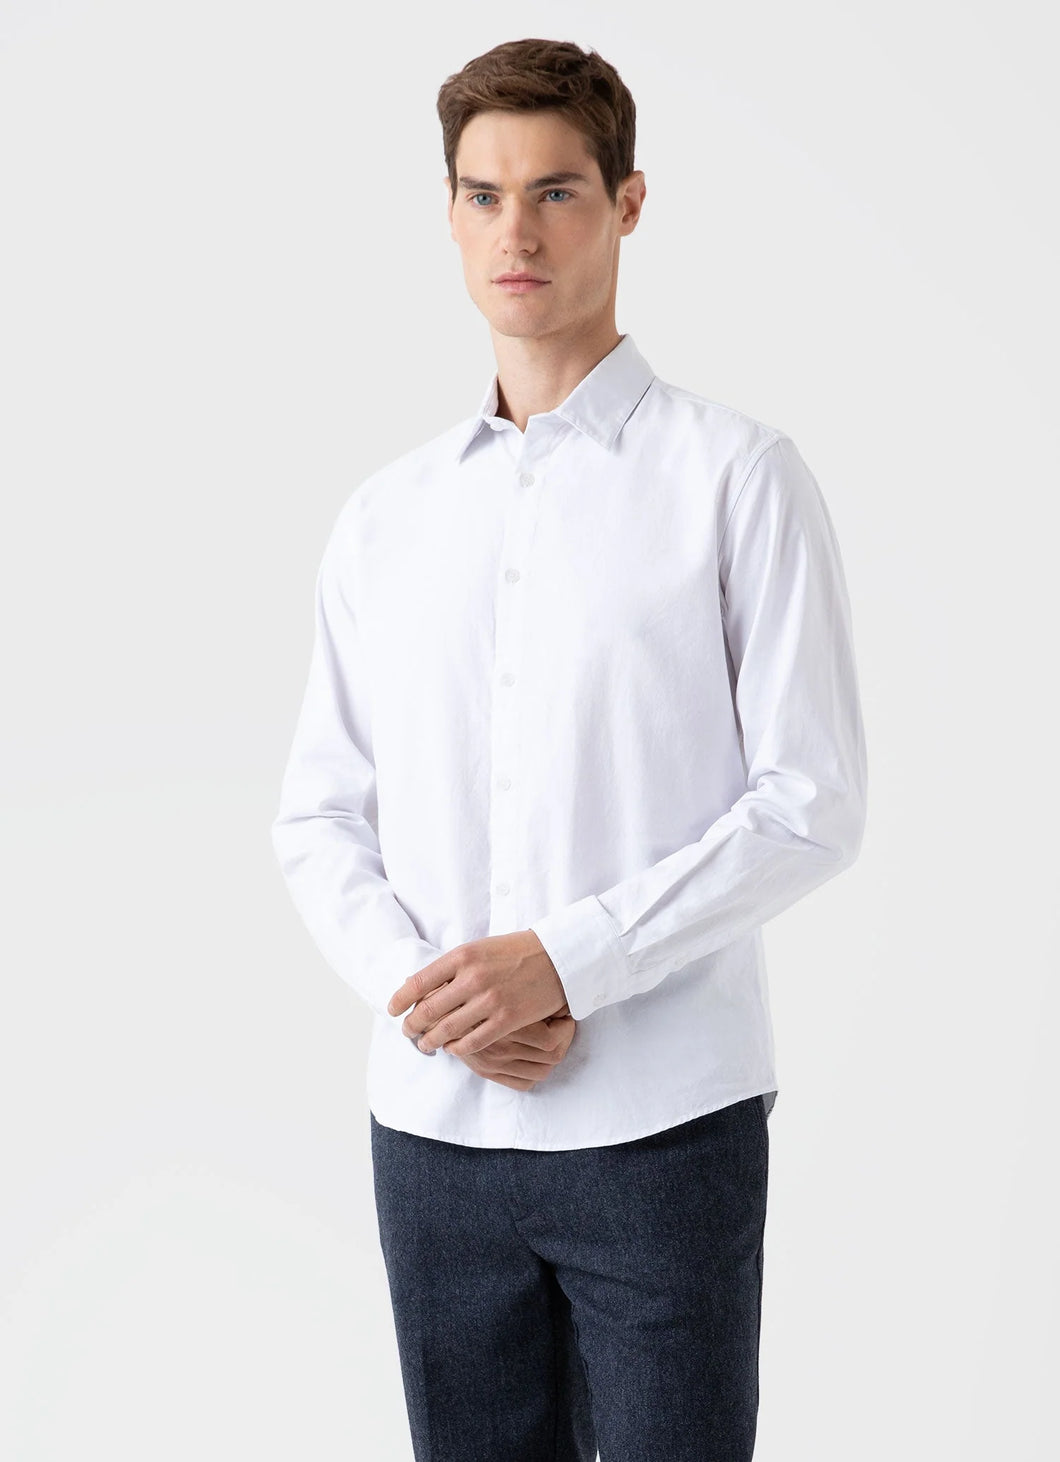 Model wearing Sunspel - Oxford Shirt in White.